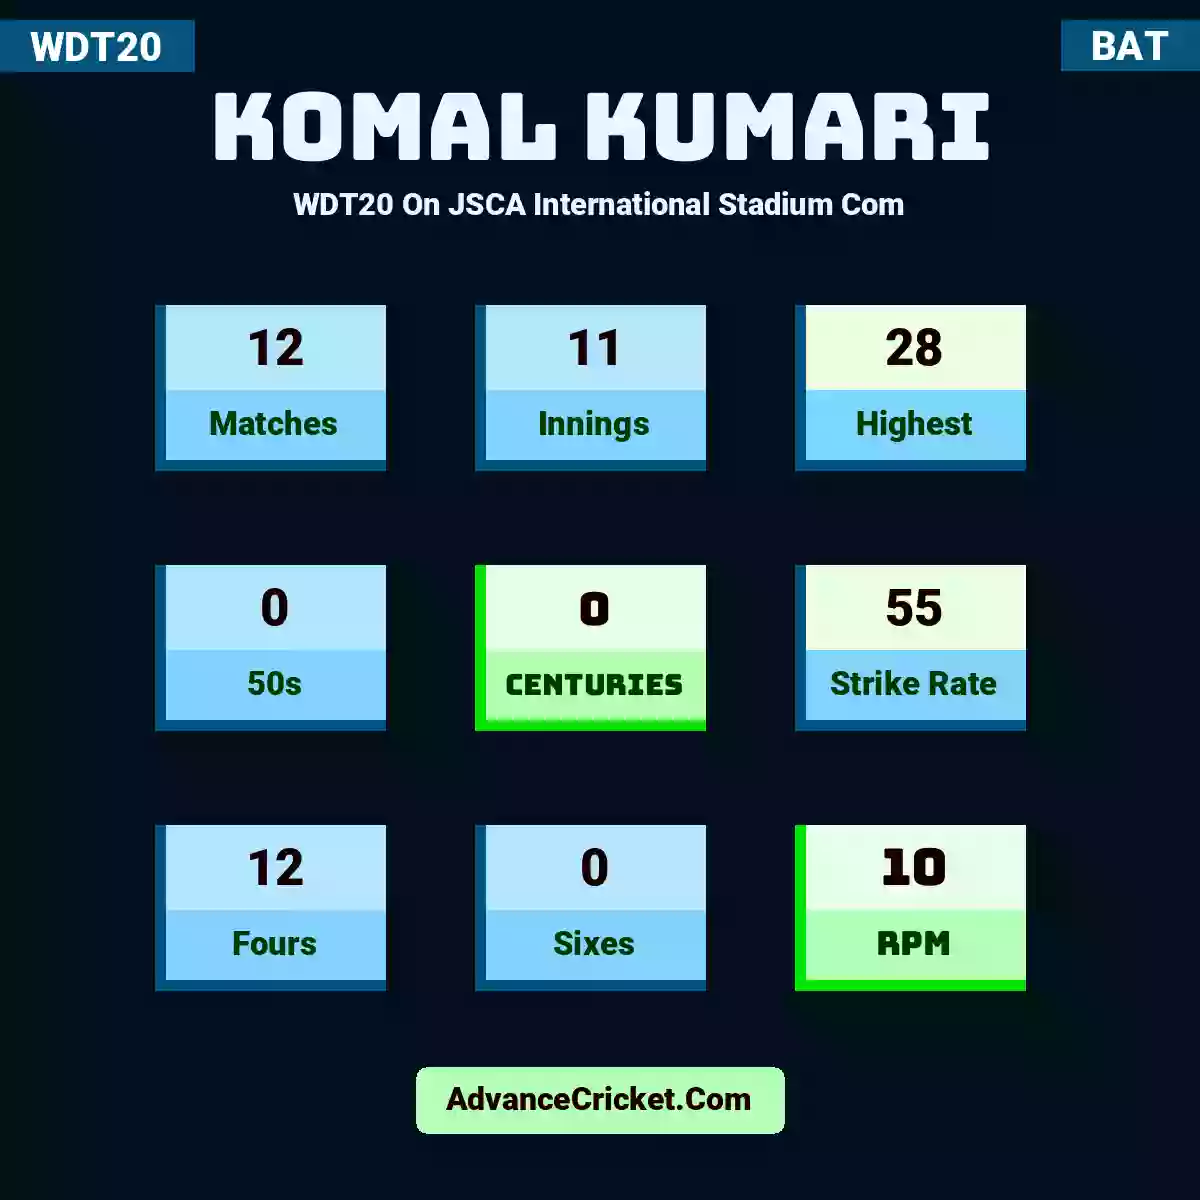 Komal Kumari WDT20  On JSCA International Stadium Com, Komal Kumari played 12 matches, scored 28 runs as highest, 0 half-centuries, and 0 centuries, with a strike rate of 55. K.Kumari hit 12 fours and 0 sixes, with an RPM of 10.